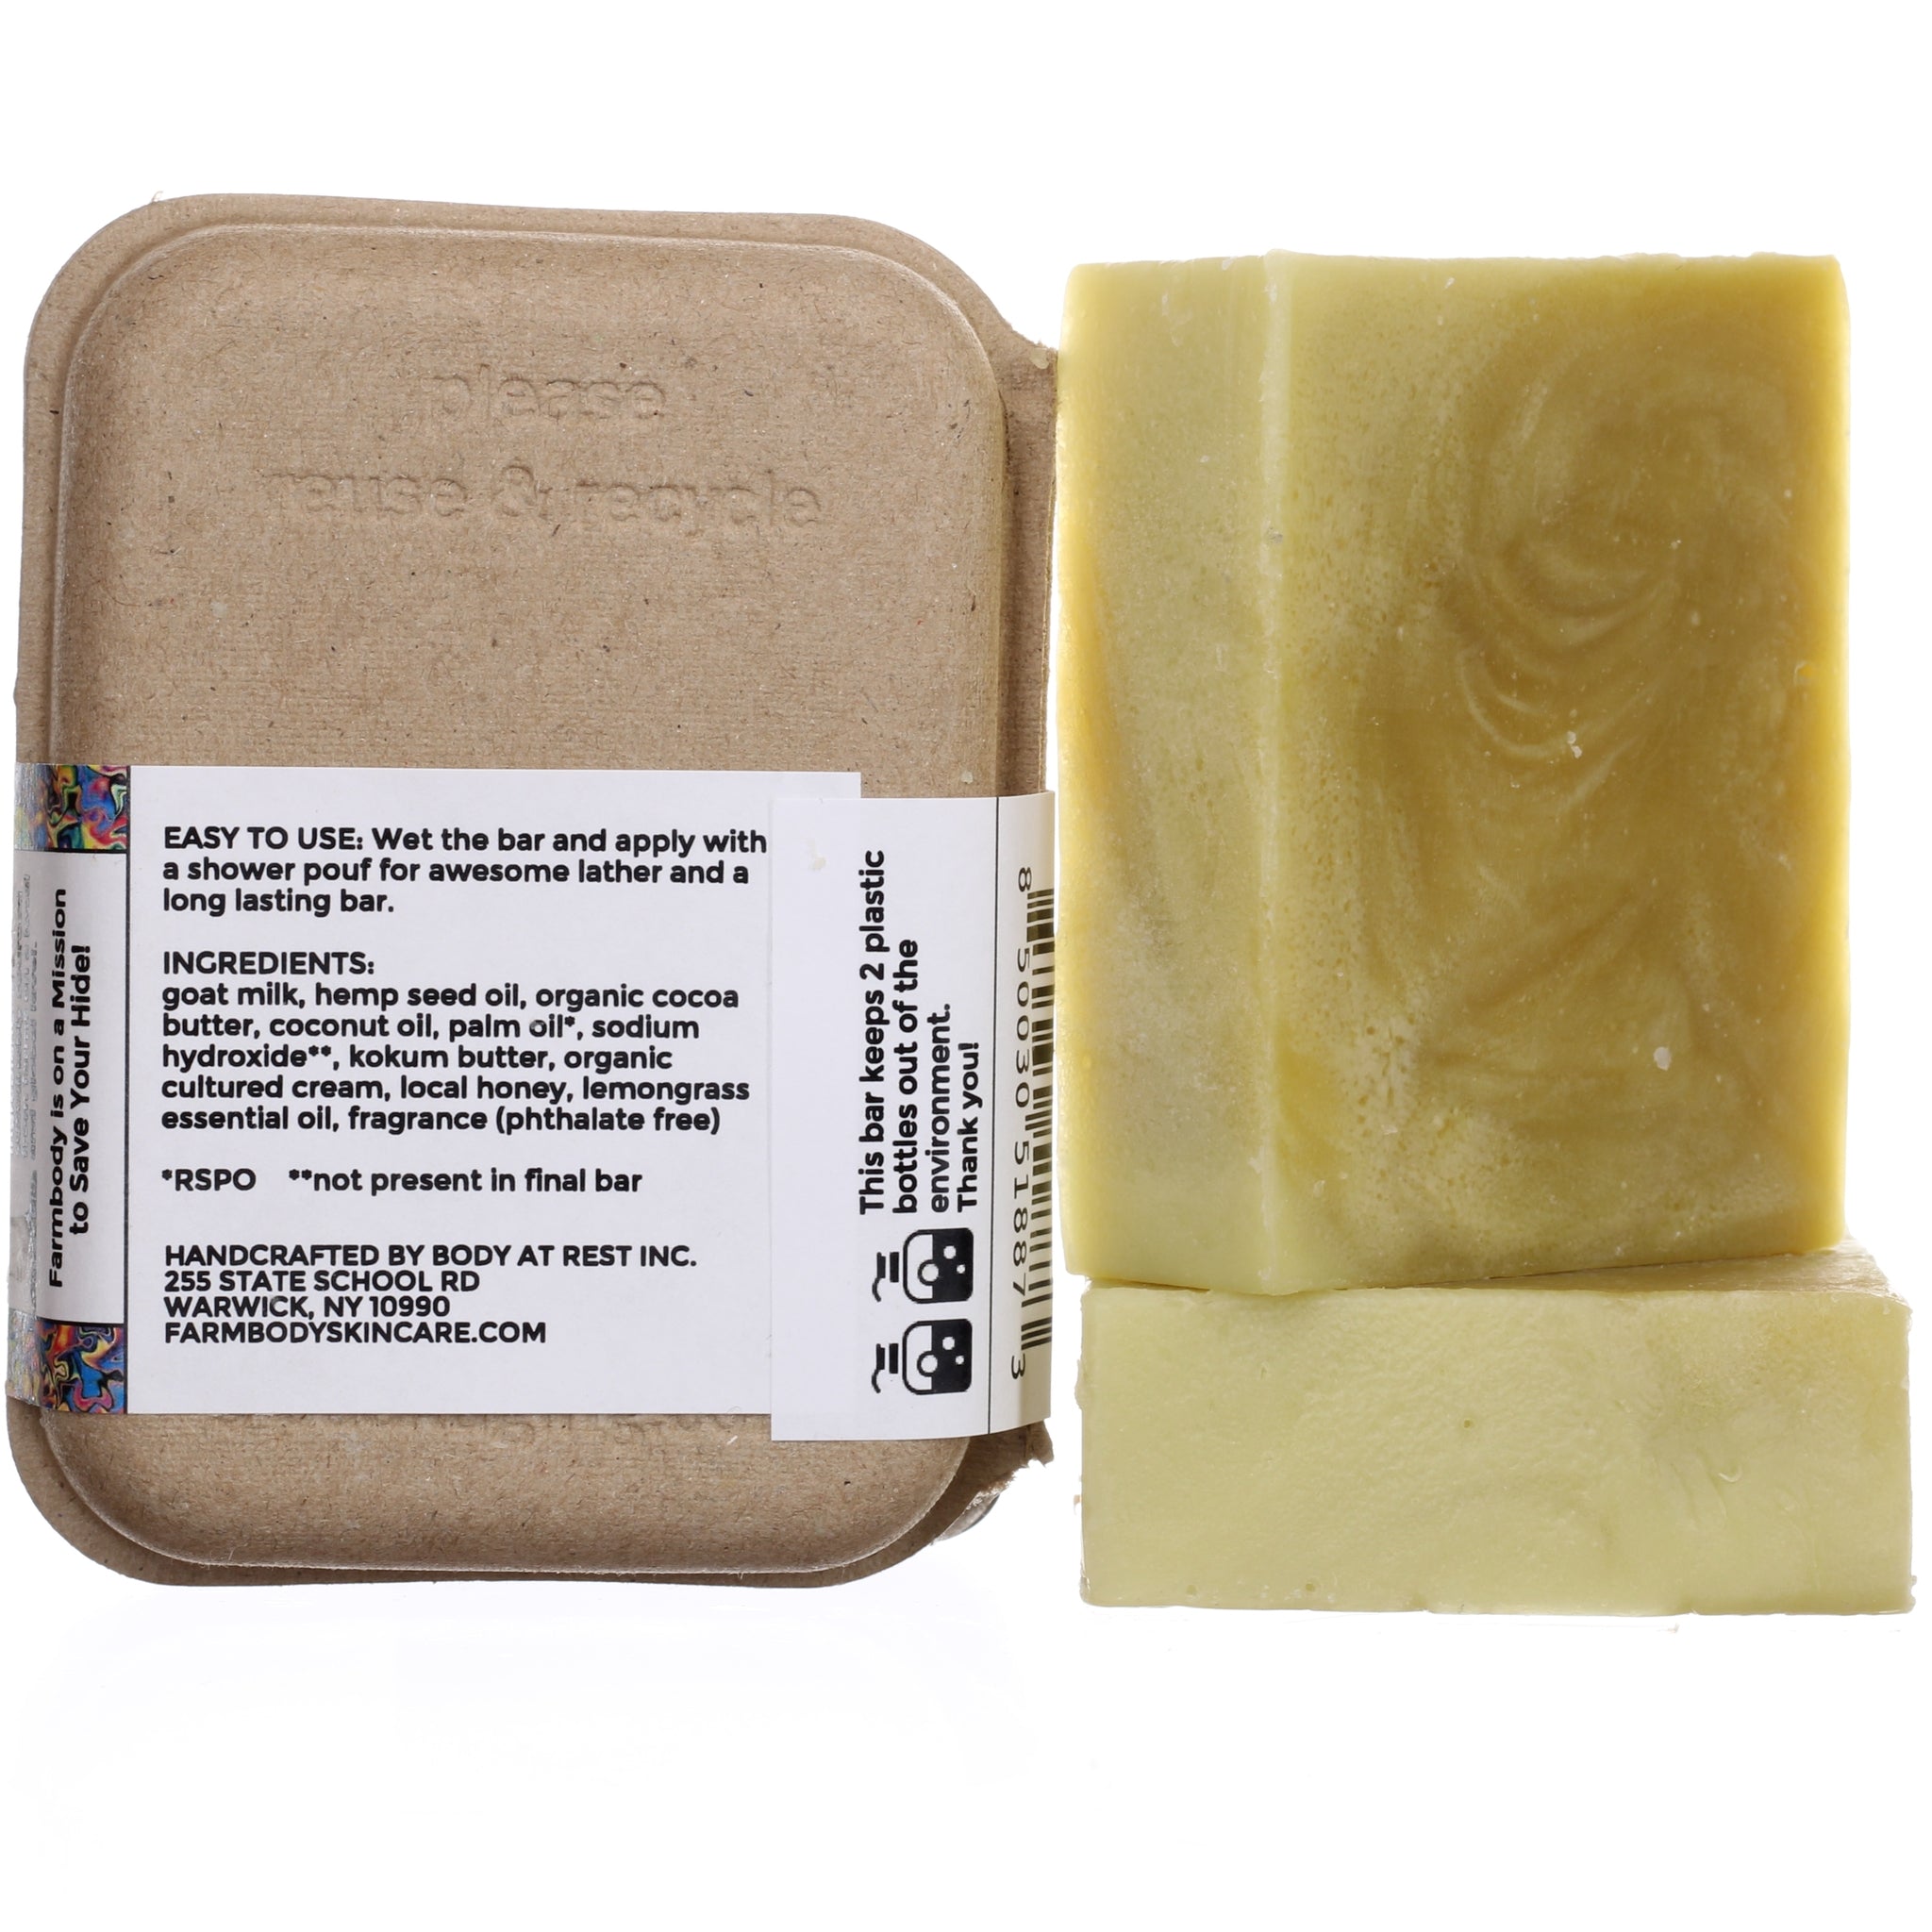 Moisturizing Goat Milk Bar Soap for Sensitive Skin | FRESH AS A DAISY - Farmbody